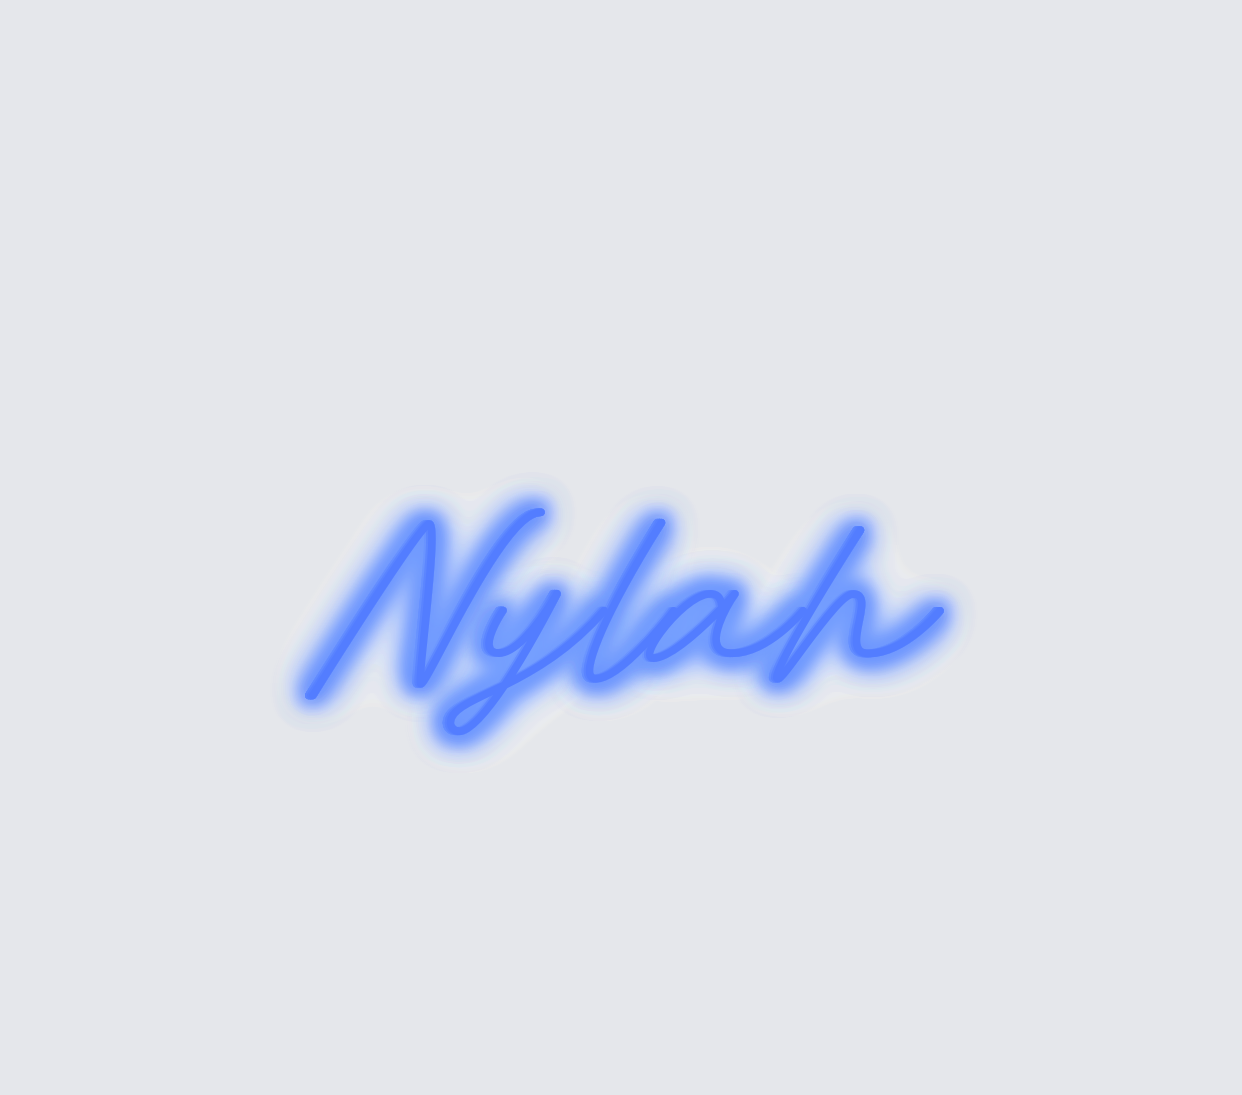 Custom neon sign - Nylah